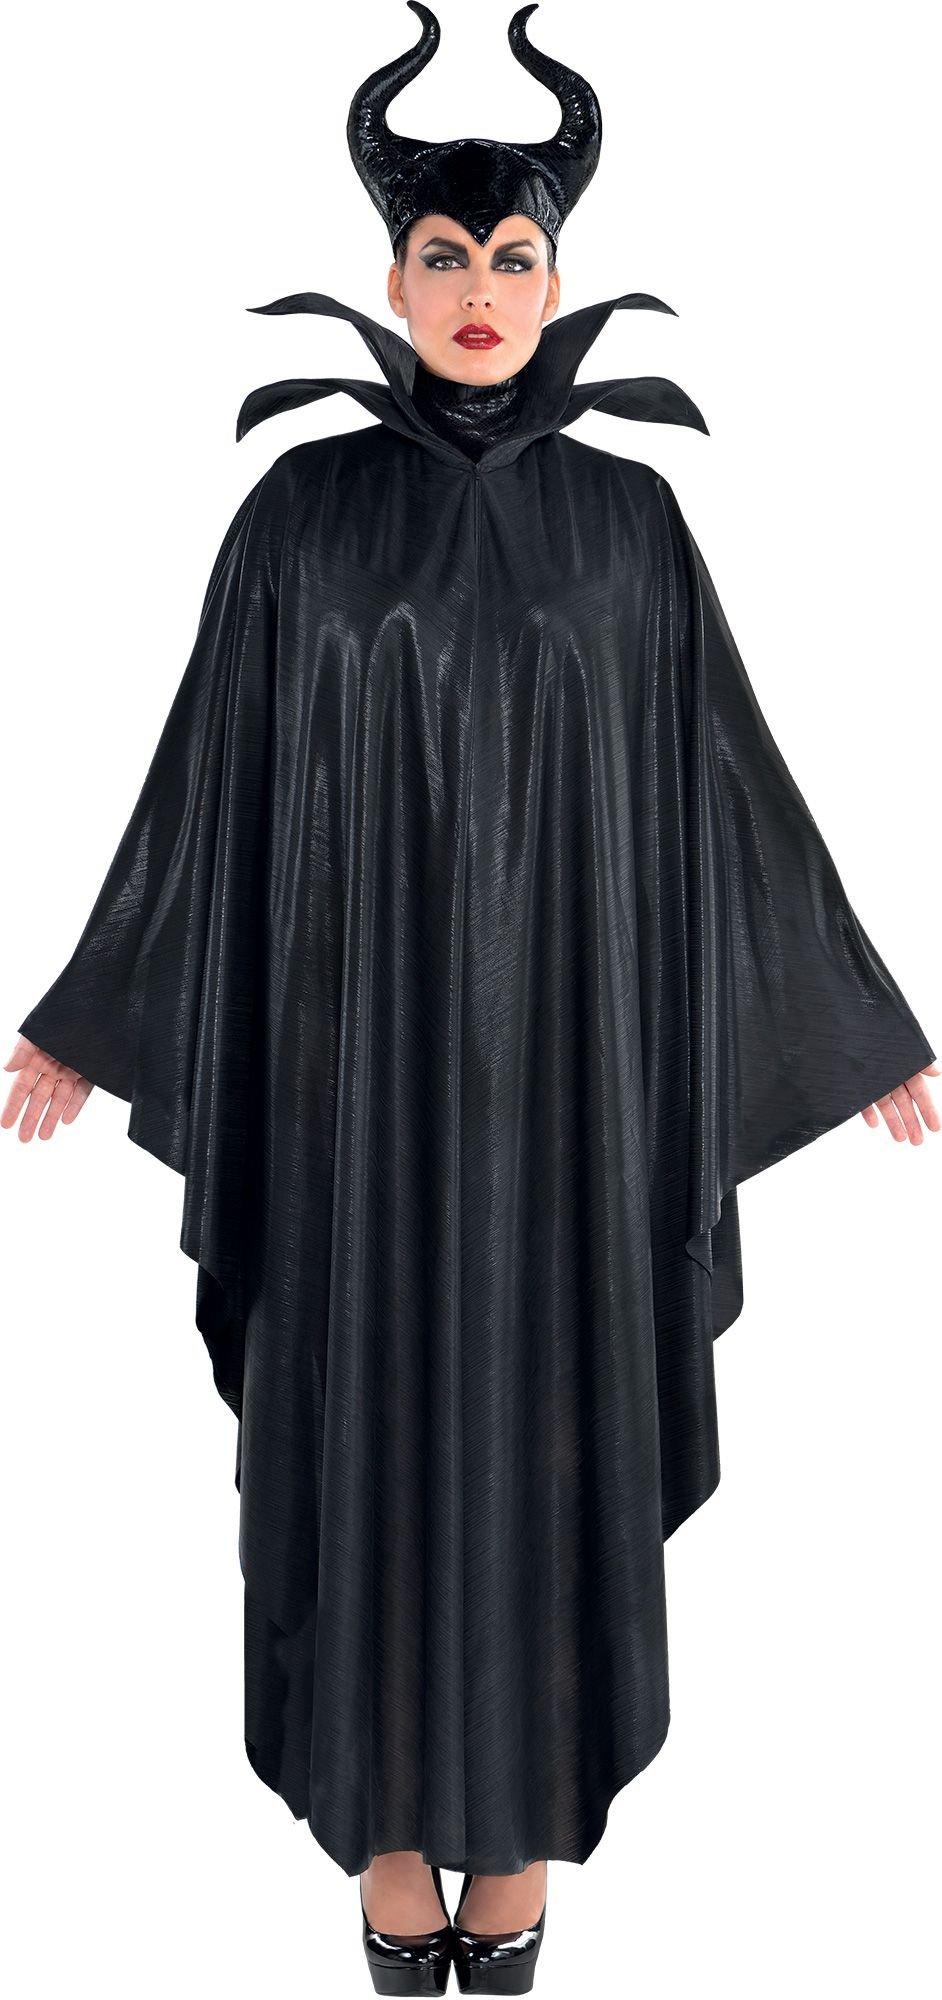 Adult Maleficent Costume Plus Size - Maleficent